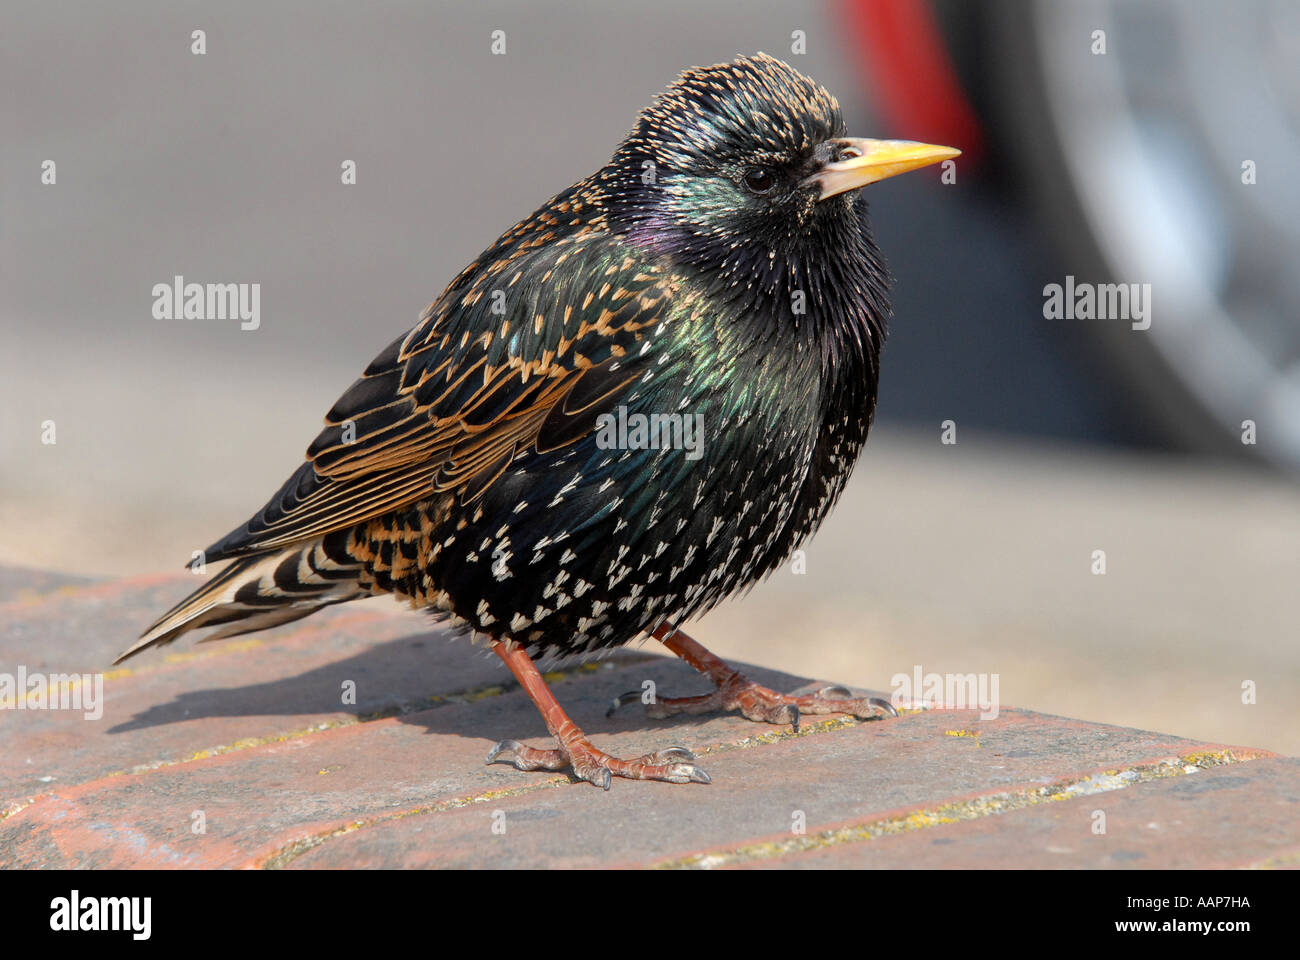 STARLING (Sturnus vulgaris vulgaris) Ben amato British bird ora in grave declino. Foto Stock